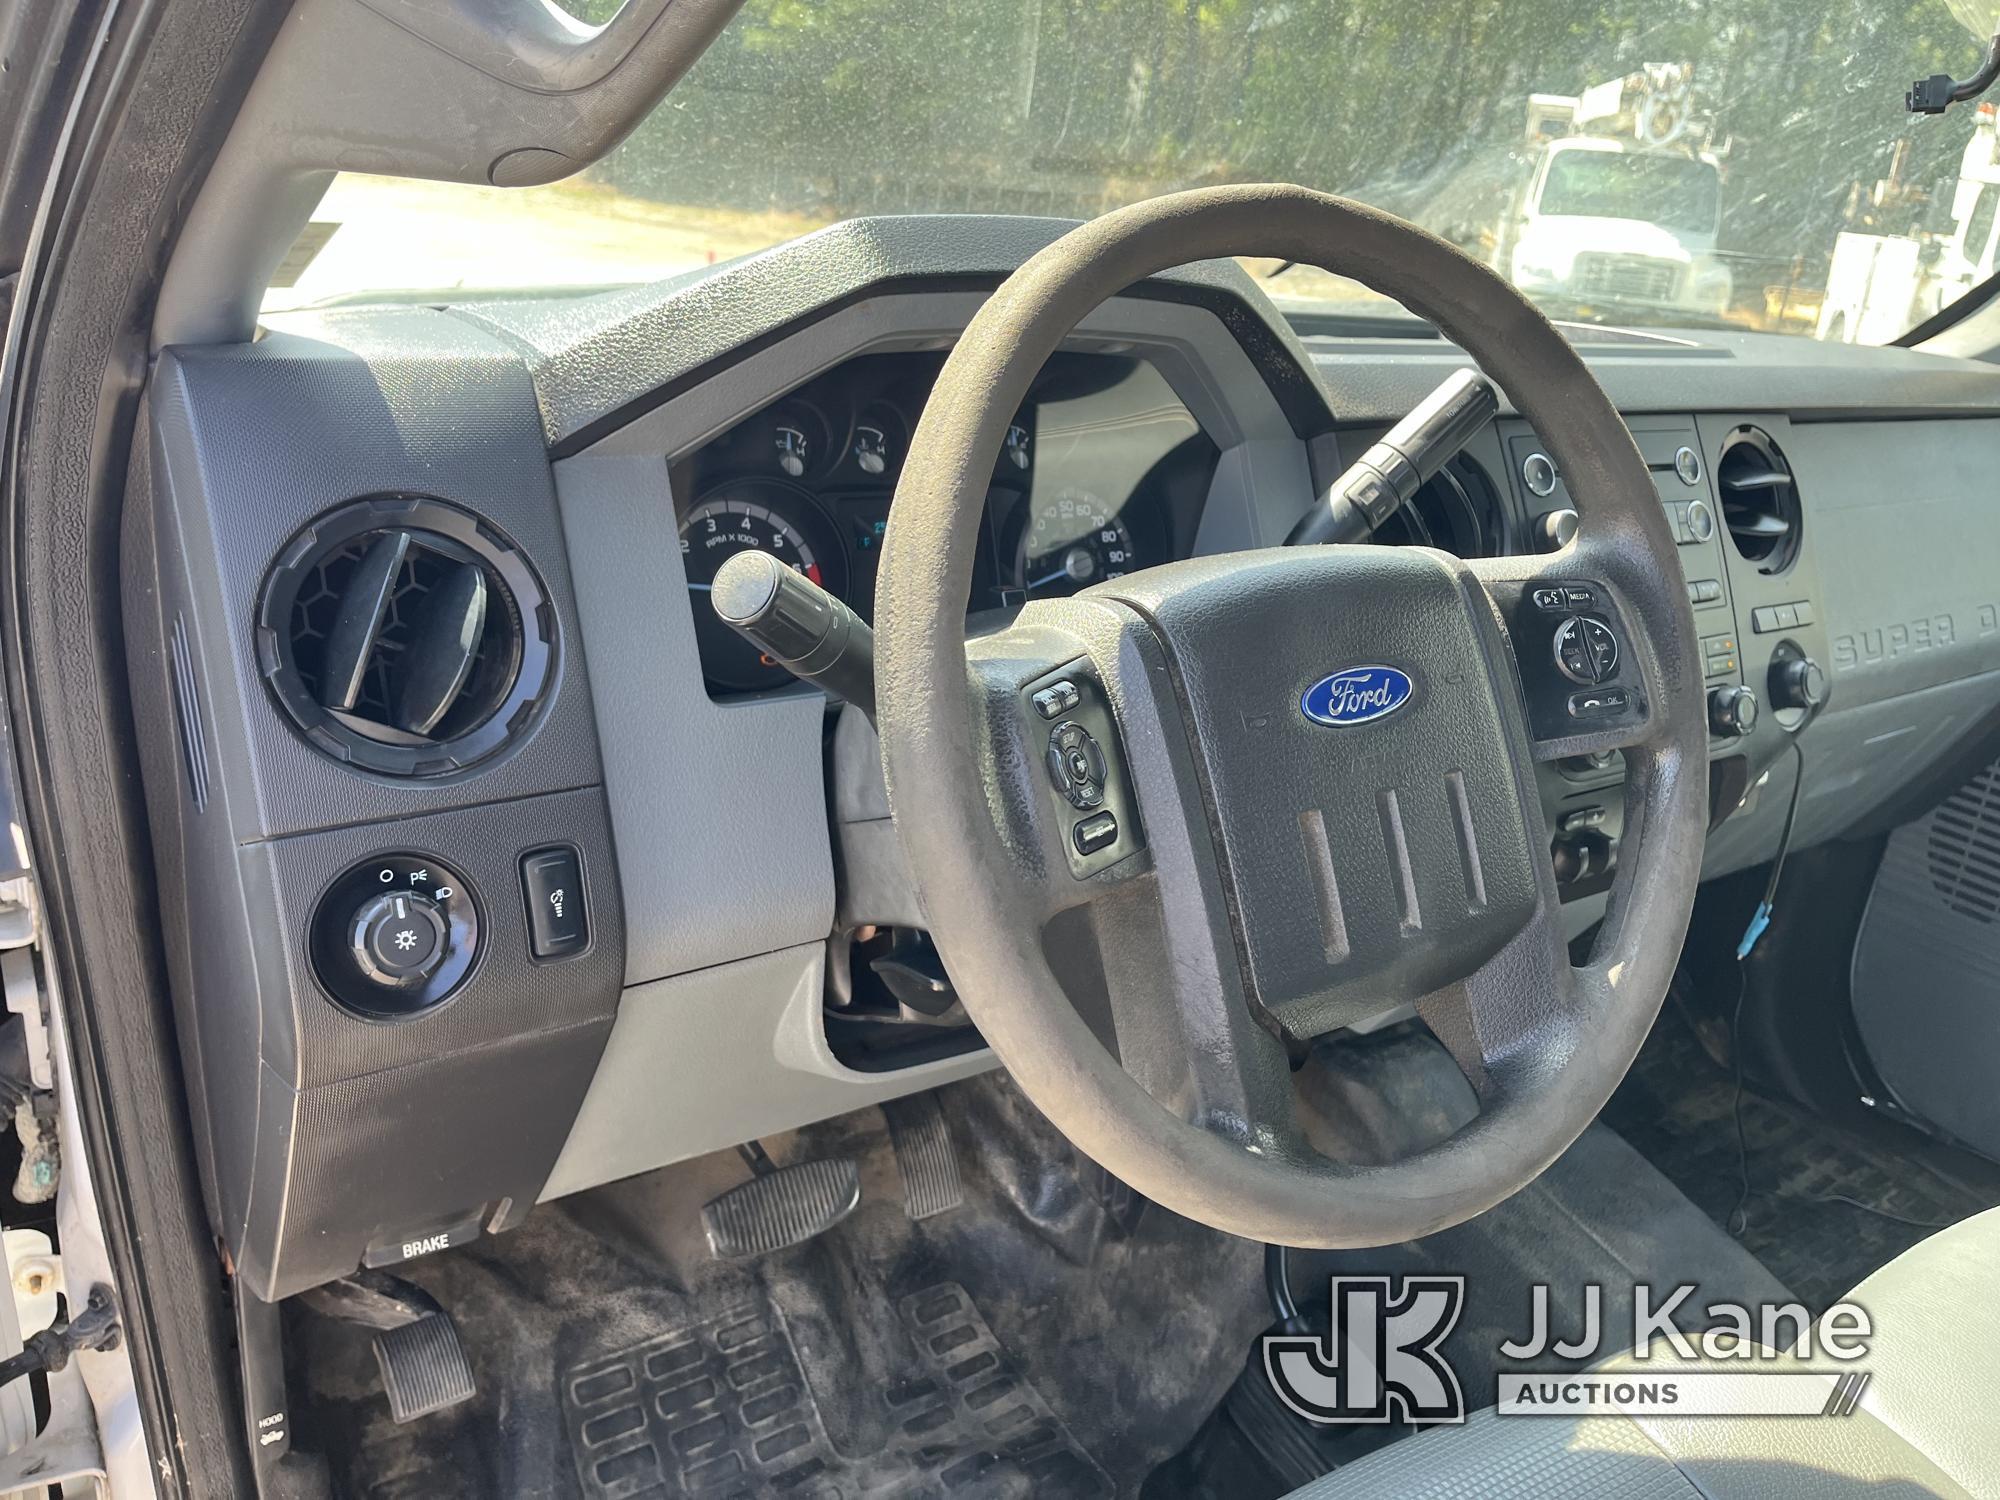 (Chester, VA) 2015 Ford F250 4x4 Crew-Cab Pickup Truck Runs & Moves) (Check Engine Light On) (Seller